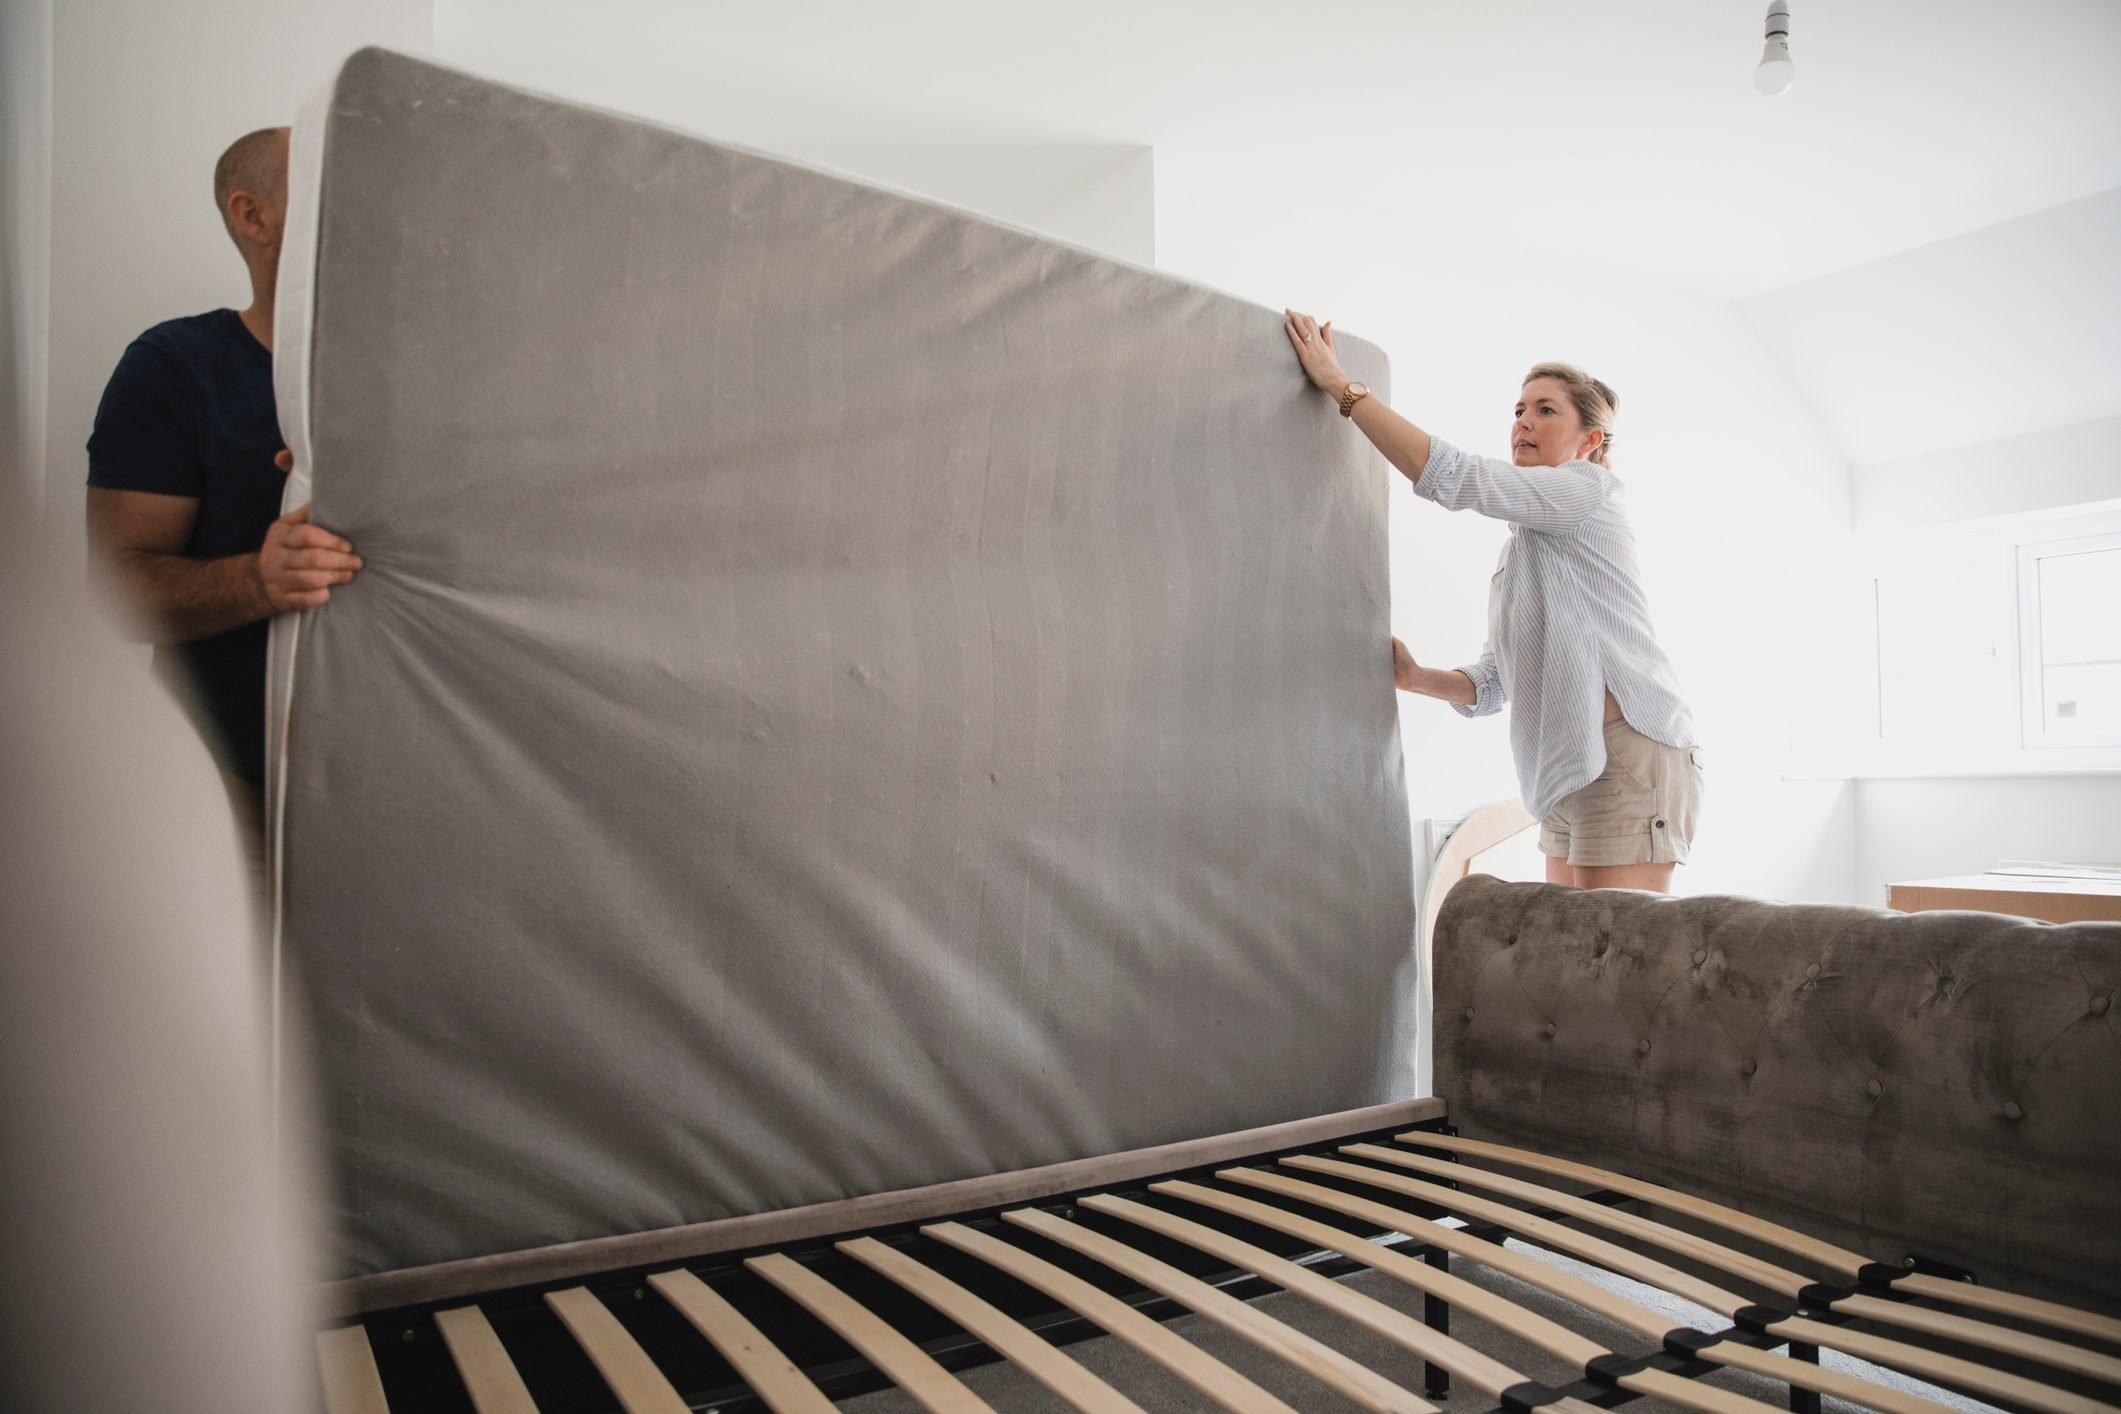 easiest ways to flip a king size mattress